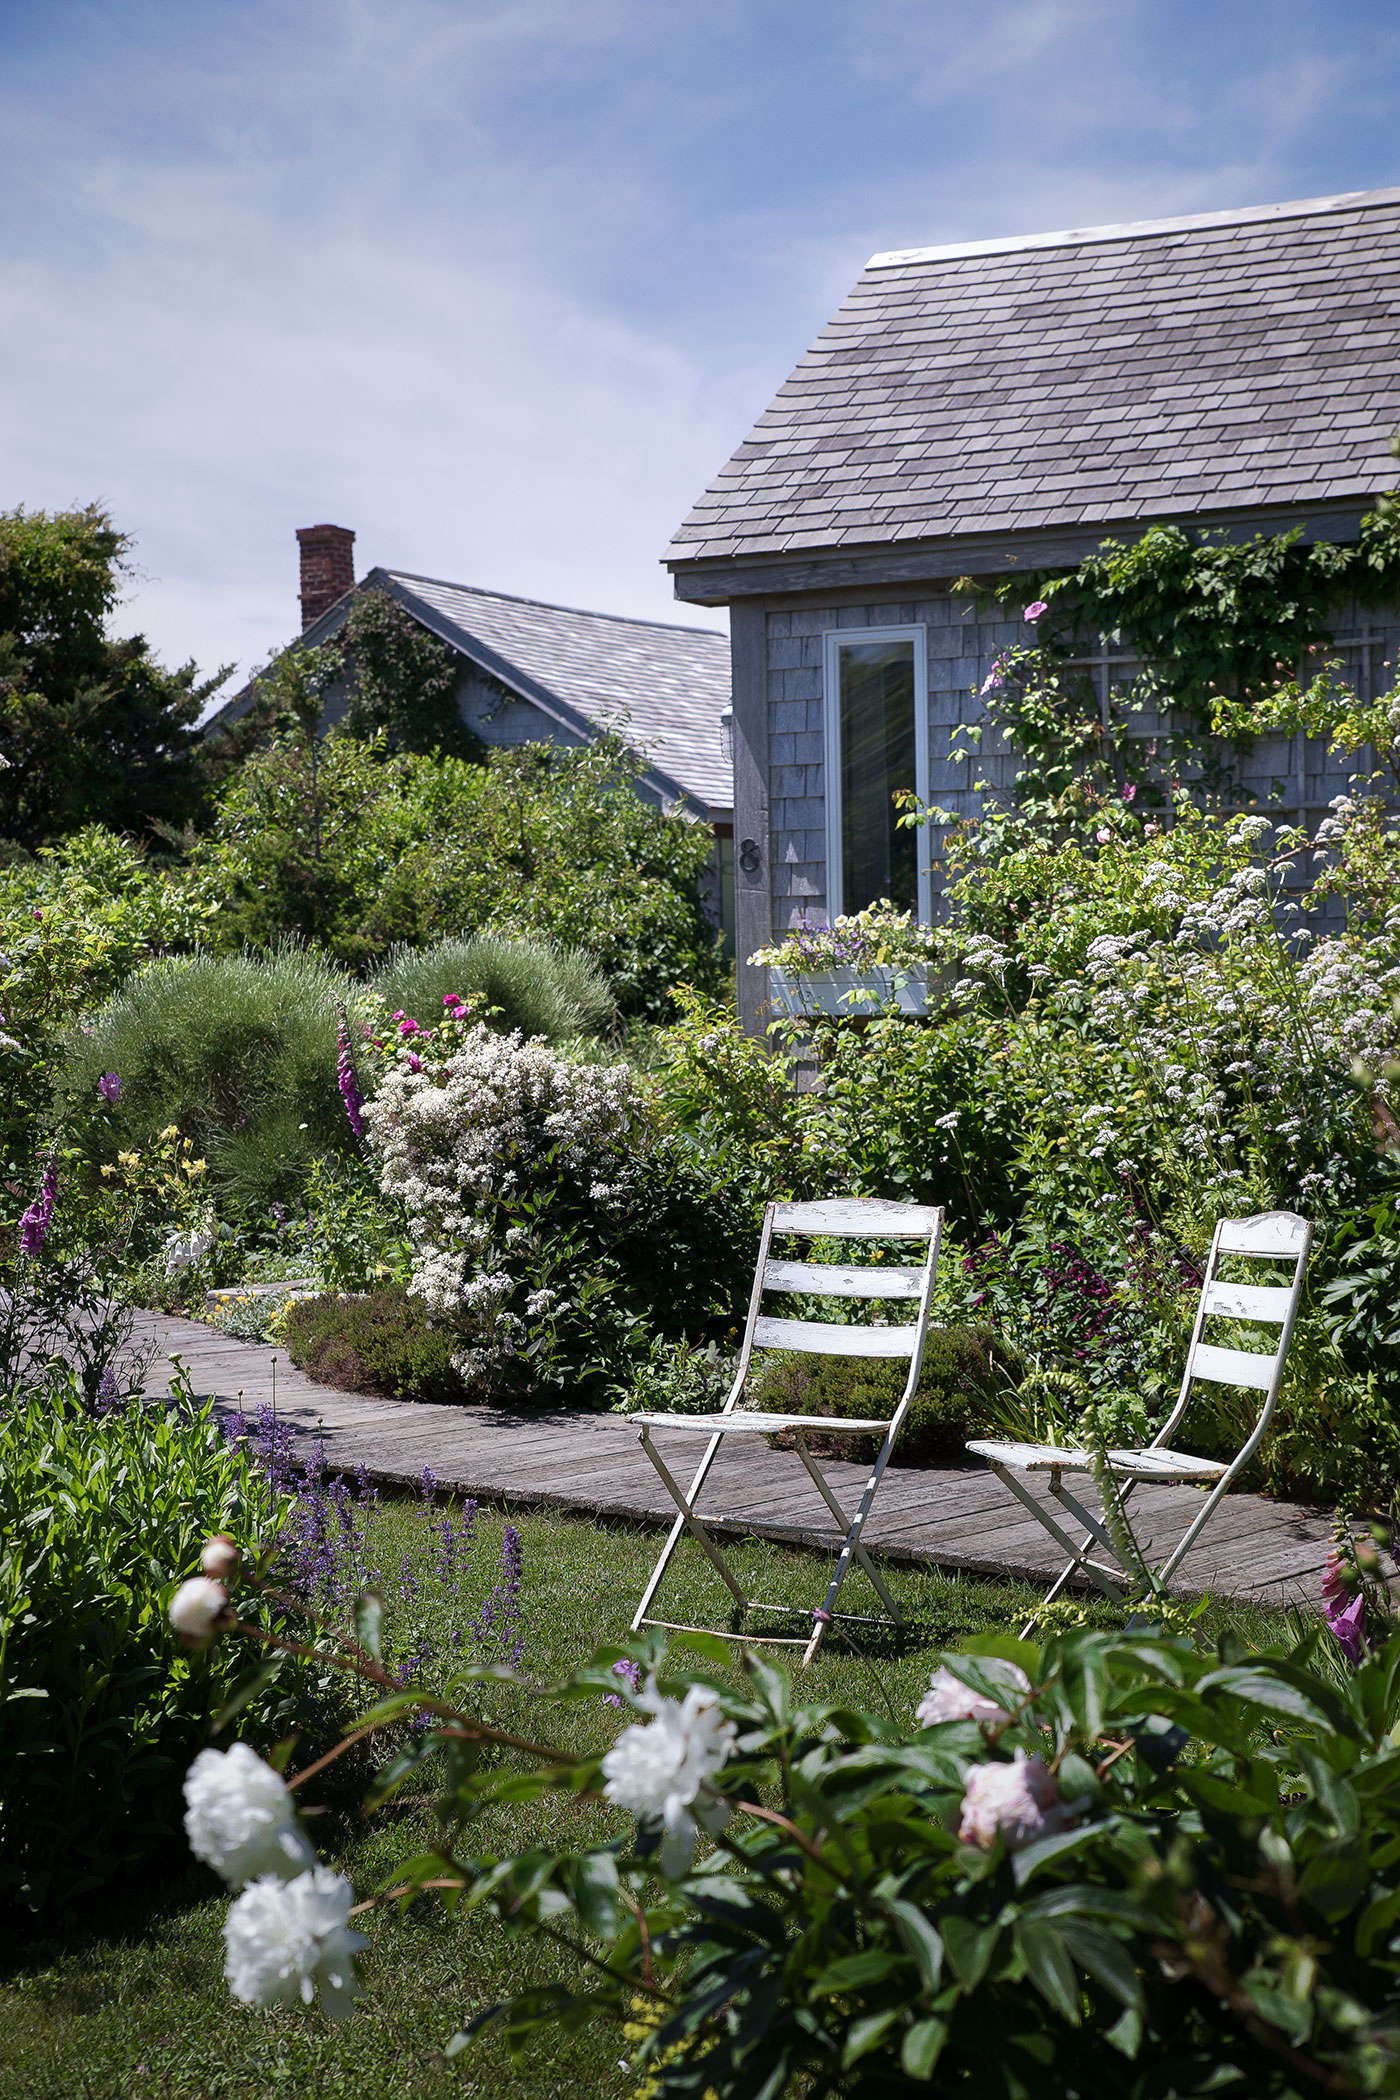 Landscaping Ideas: A Classic Cottage Garden on Cape Cod - Gardenista